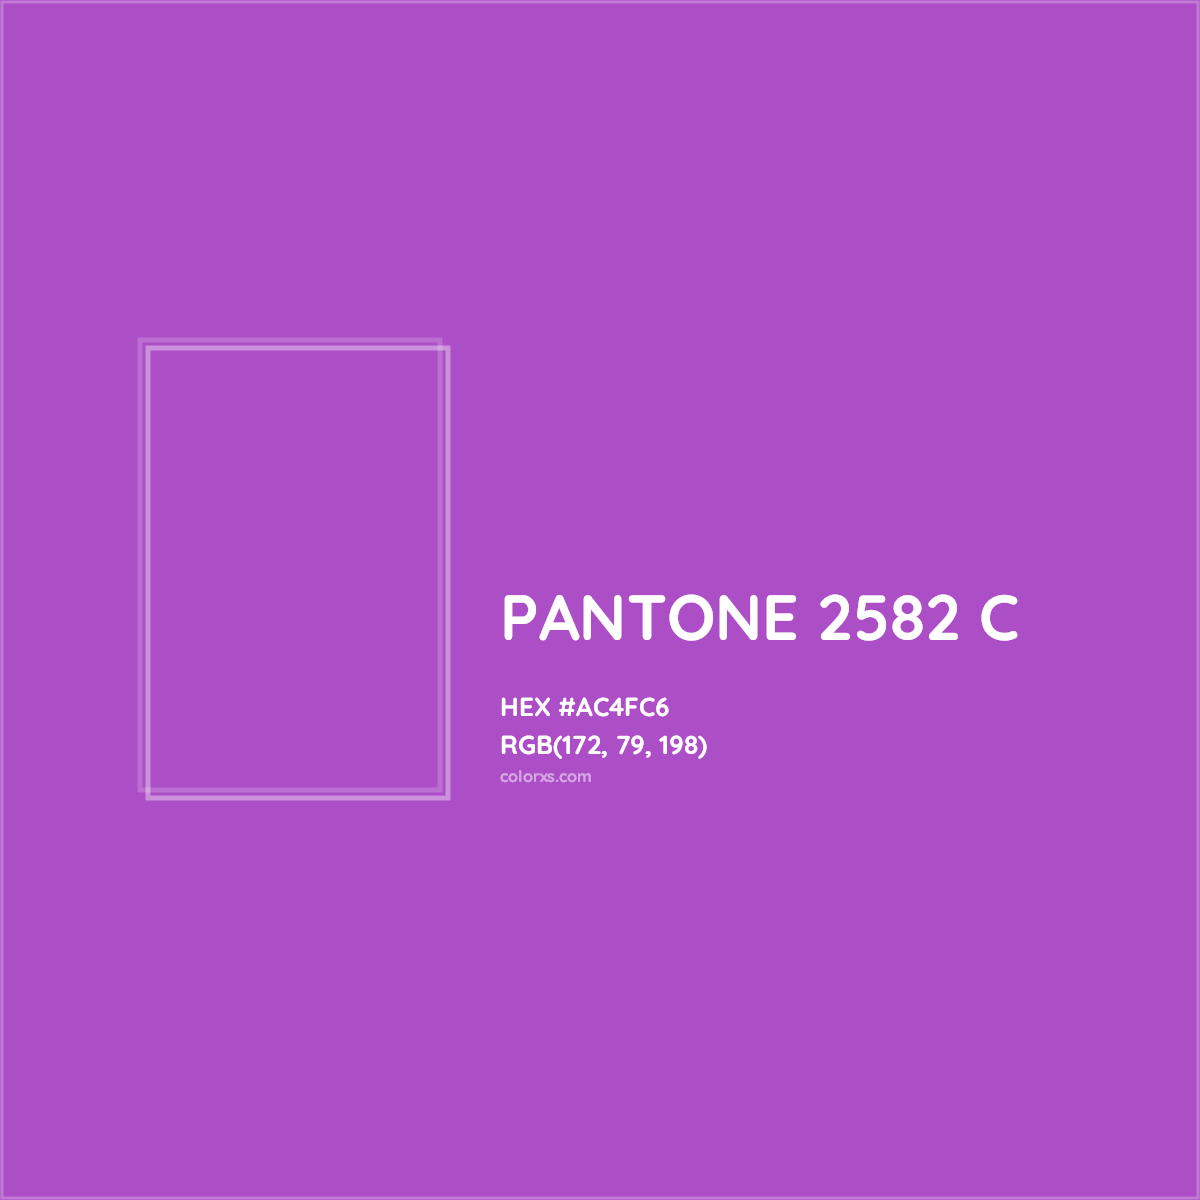 HEX #AC4FC6 PANTONE 2582 C CMS Pantone PMS - Color Code